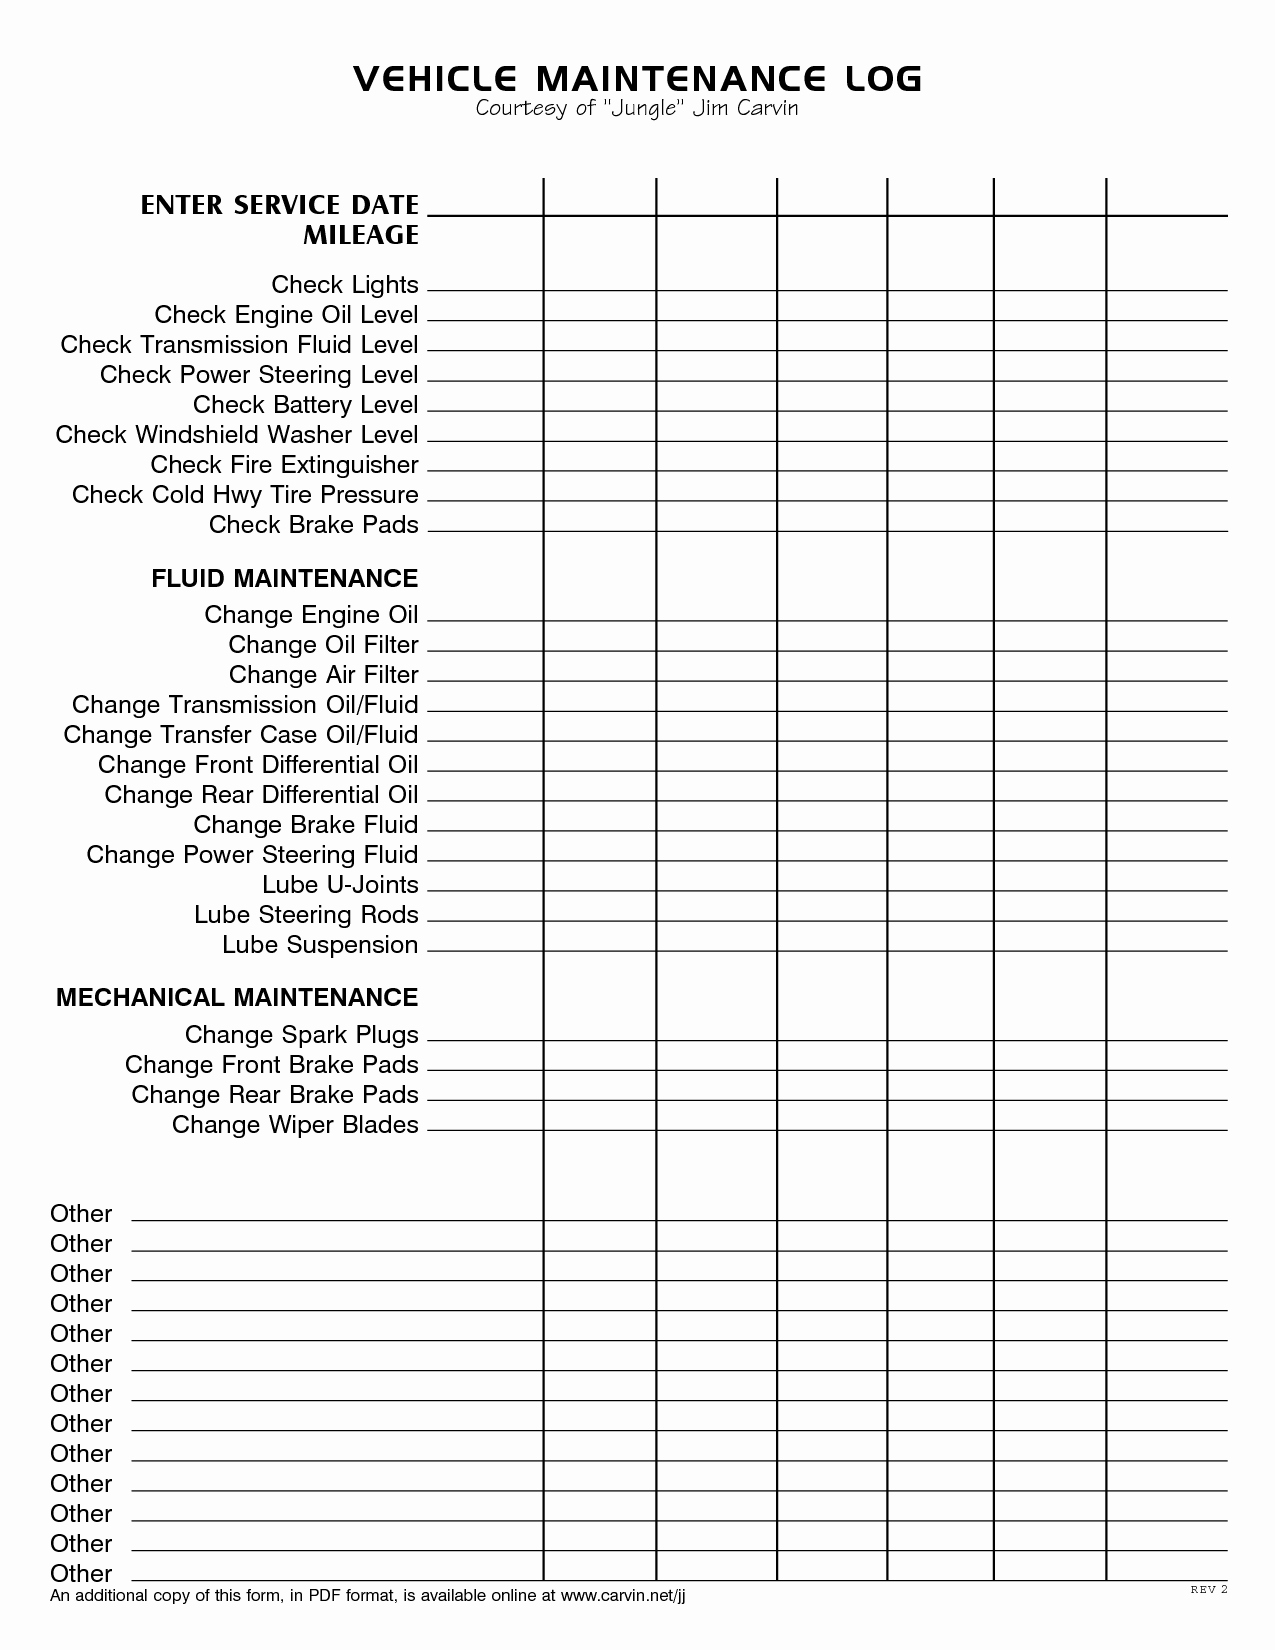 Vehicle Maintenance Schedule Template Elegant Vehicle Maintenance Log Book Template